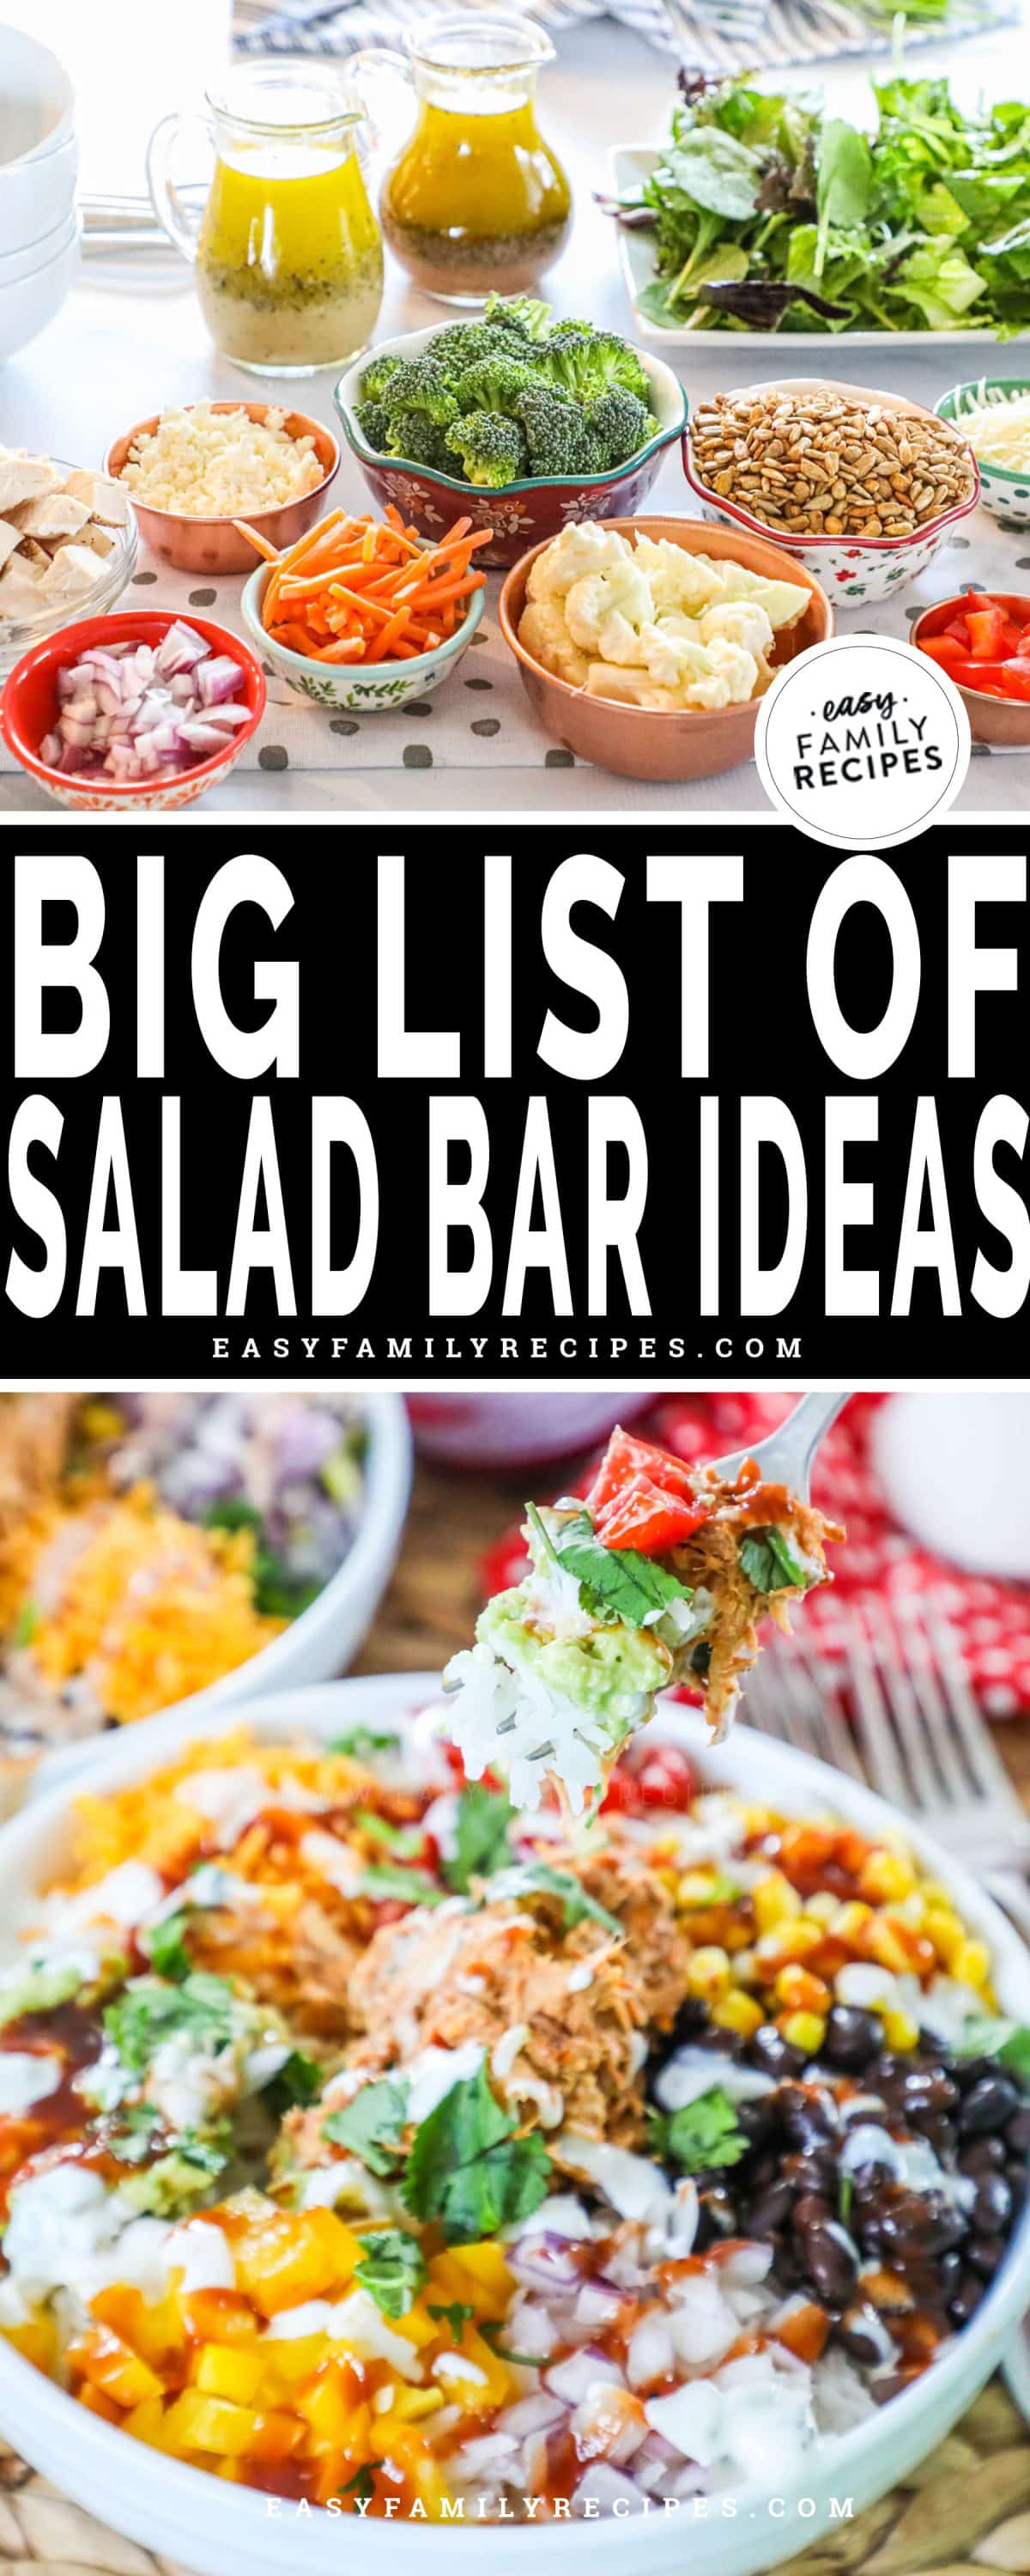 https://easyfamilyrecipes.com/wp-content/uploads/2022/08/Salad-Bar-Ideas.jpg